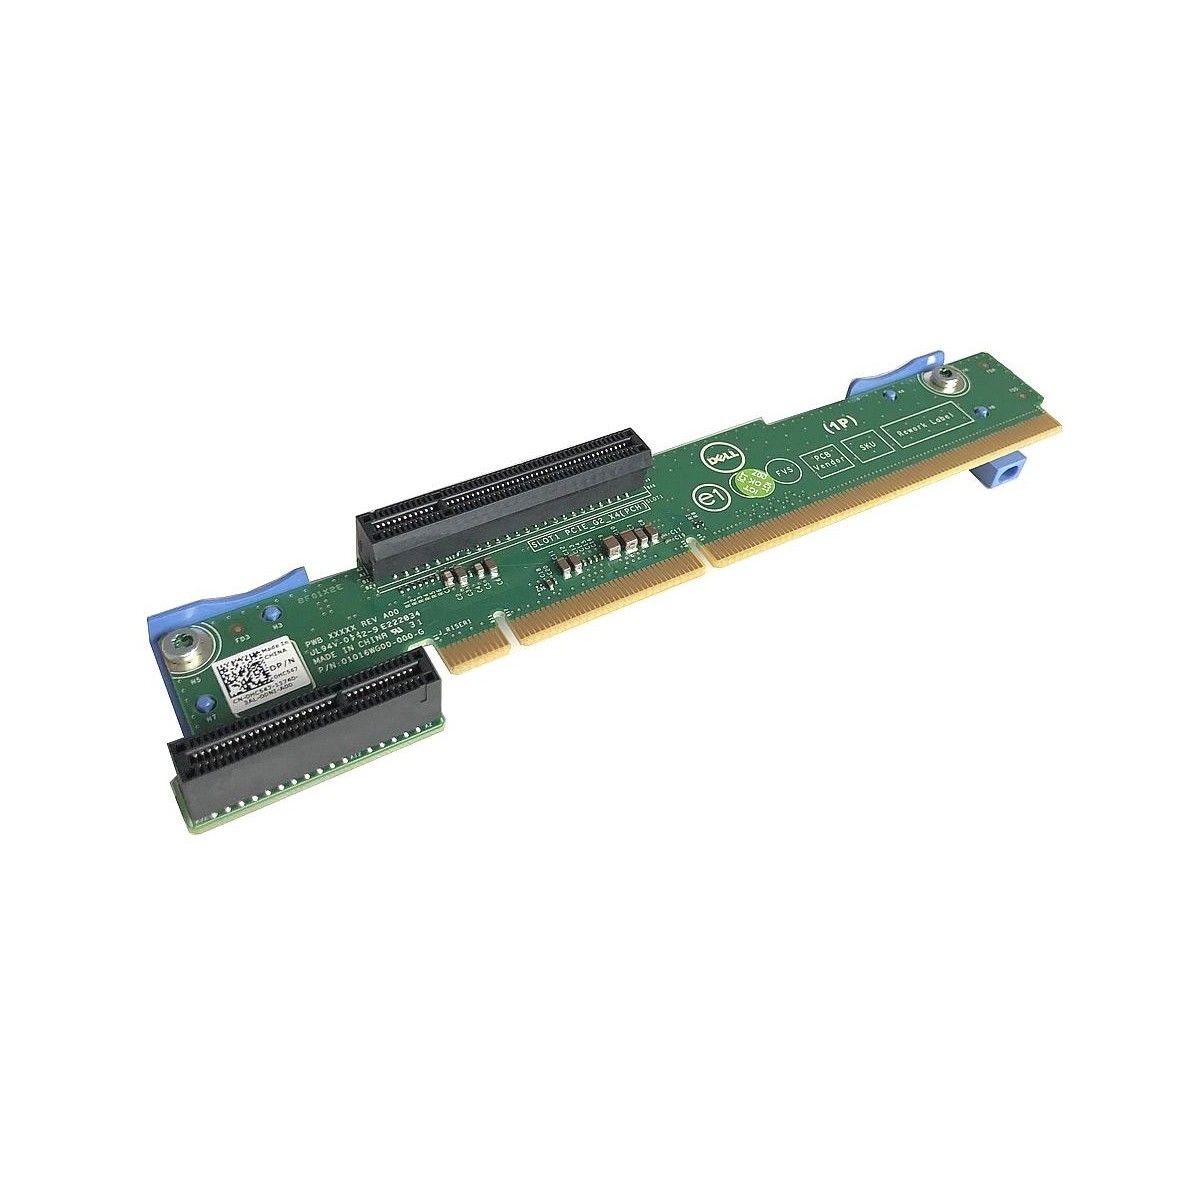 RISER CARD DELL PE R320 R420 PCI-Ex4 1xiDRAC 0HC547